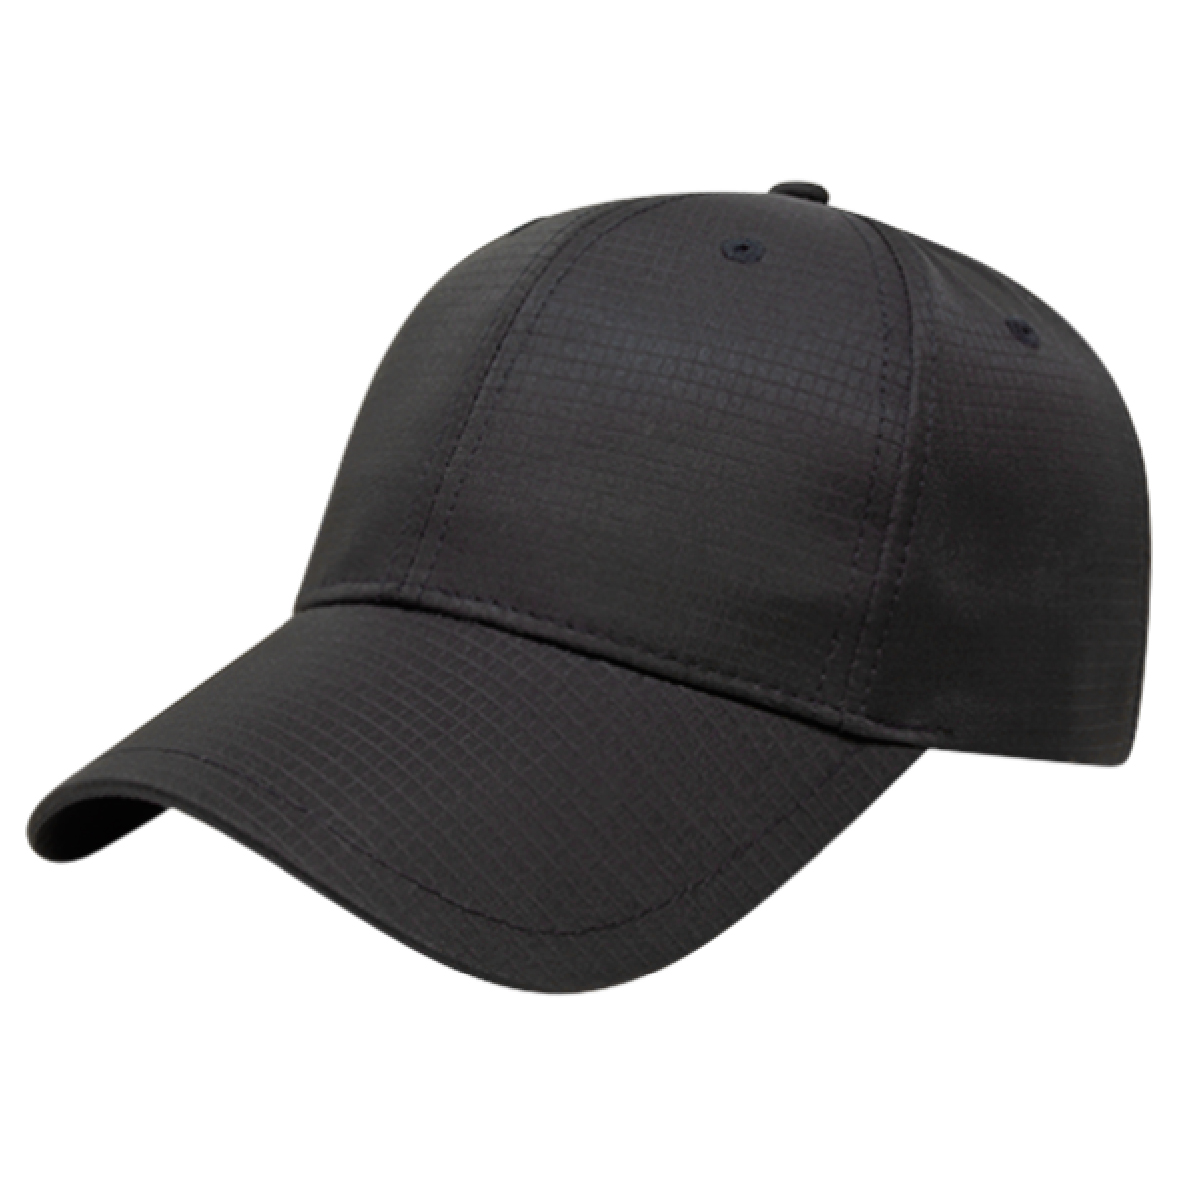 Black Soft Fit Solid Active Wear Cap